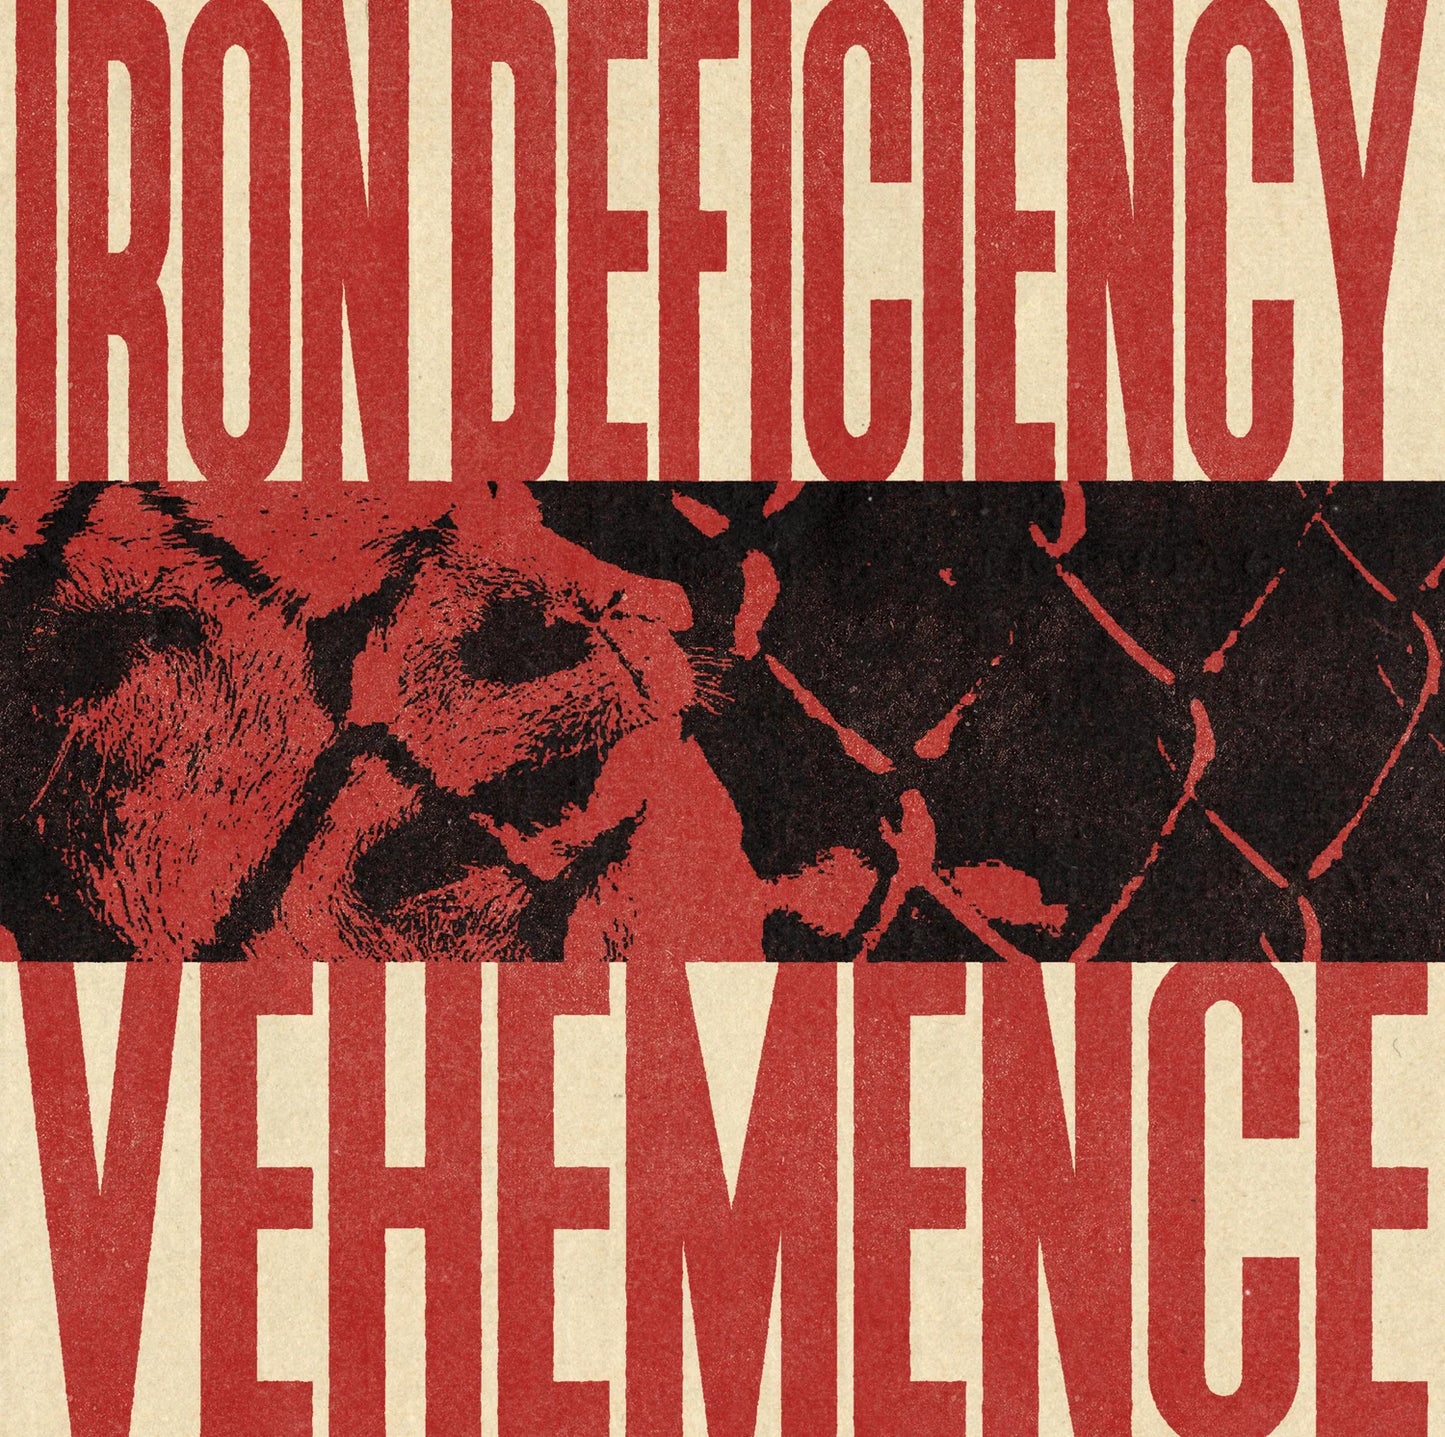 Iron Deficiency - "Vehemence" 7-inch